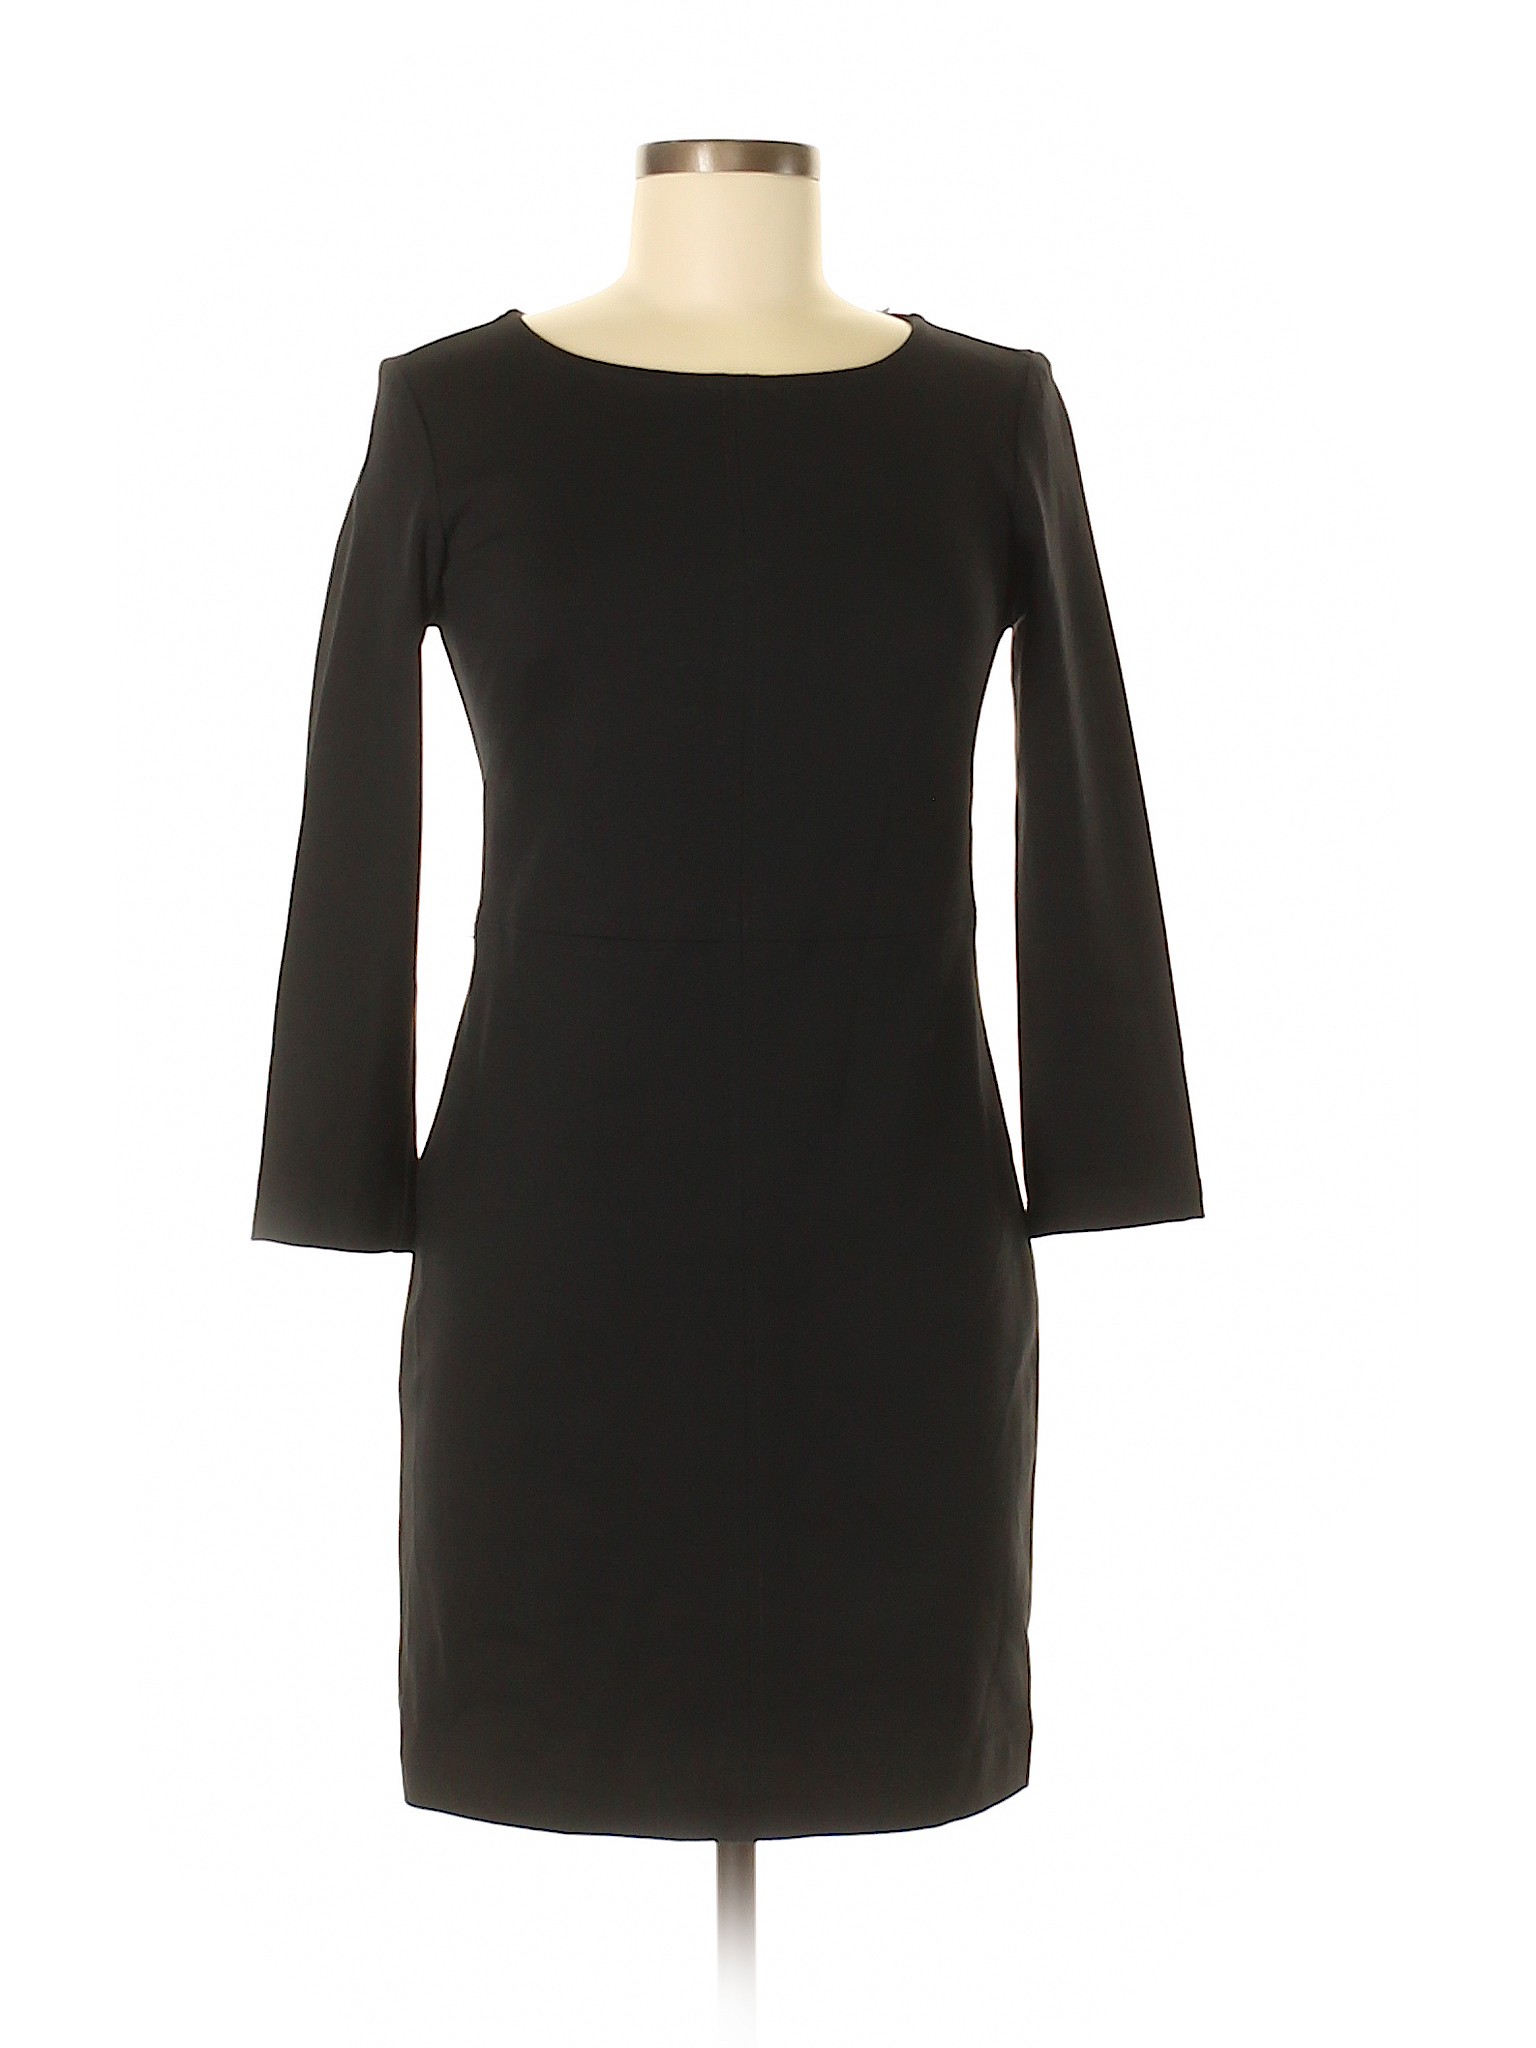 Tori Richard Solid Black Casual Dress Size 2 - 89% off | thredUP